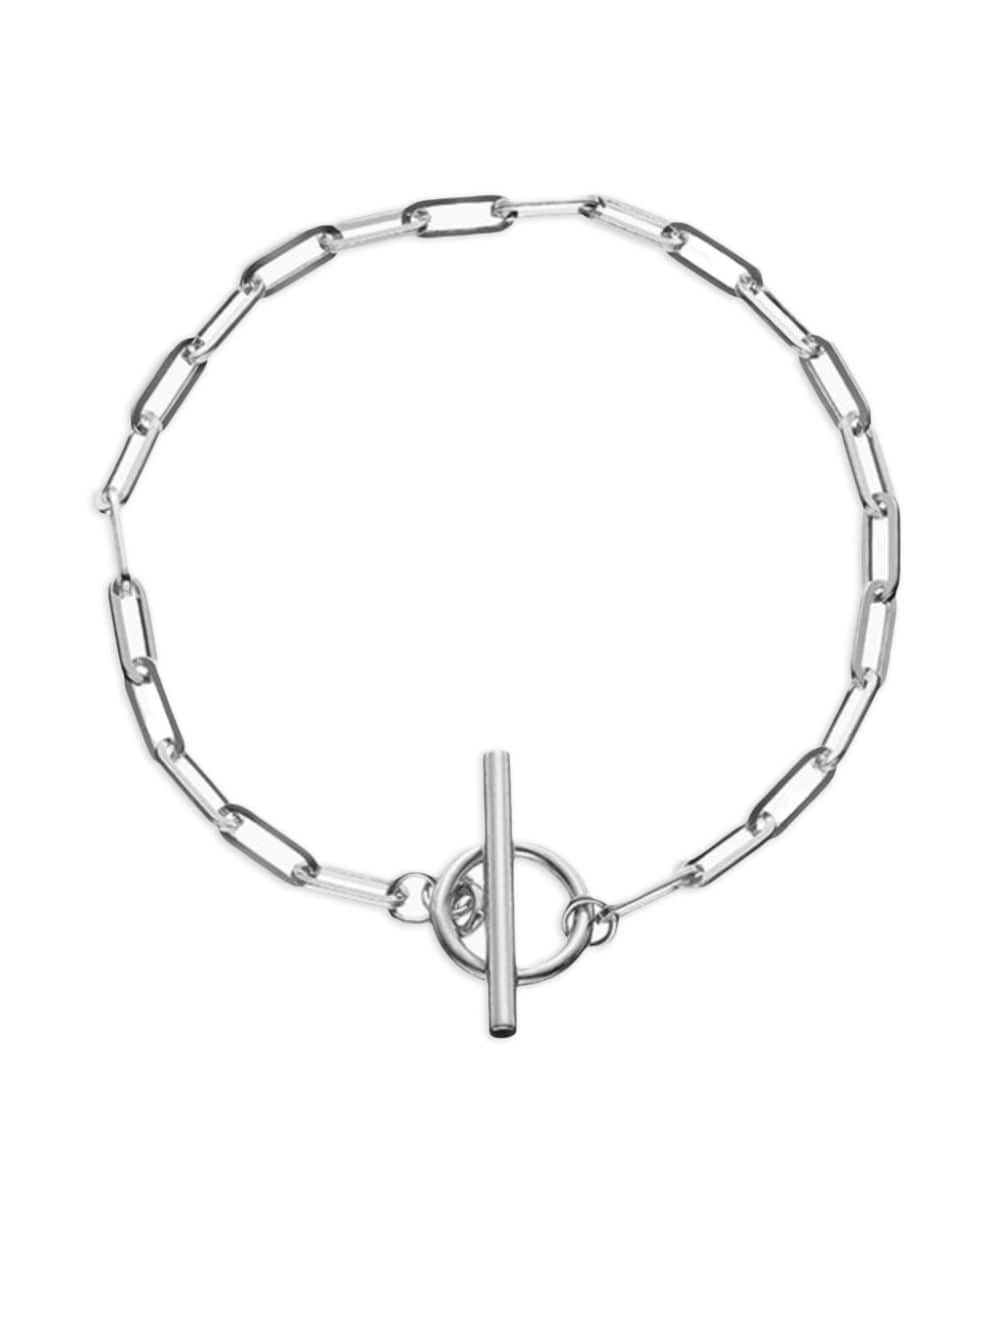 Love chain bracelet